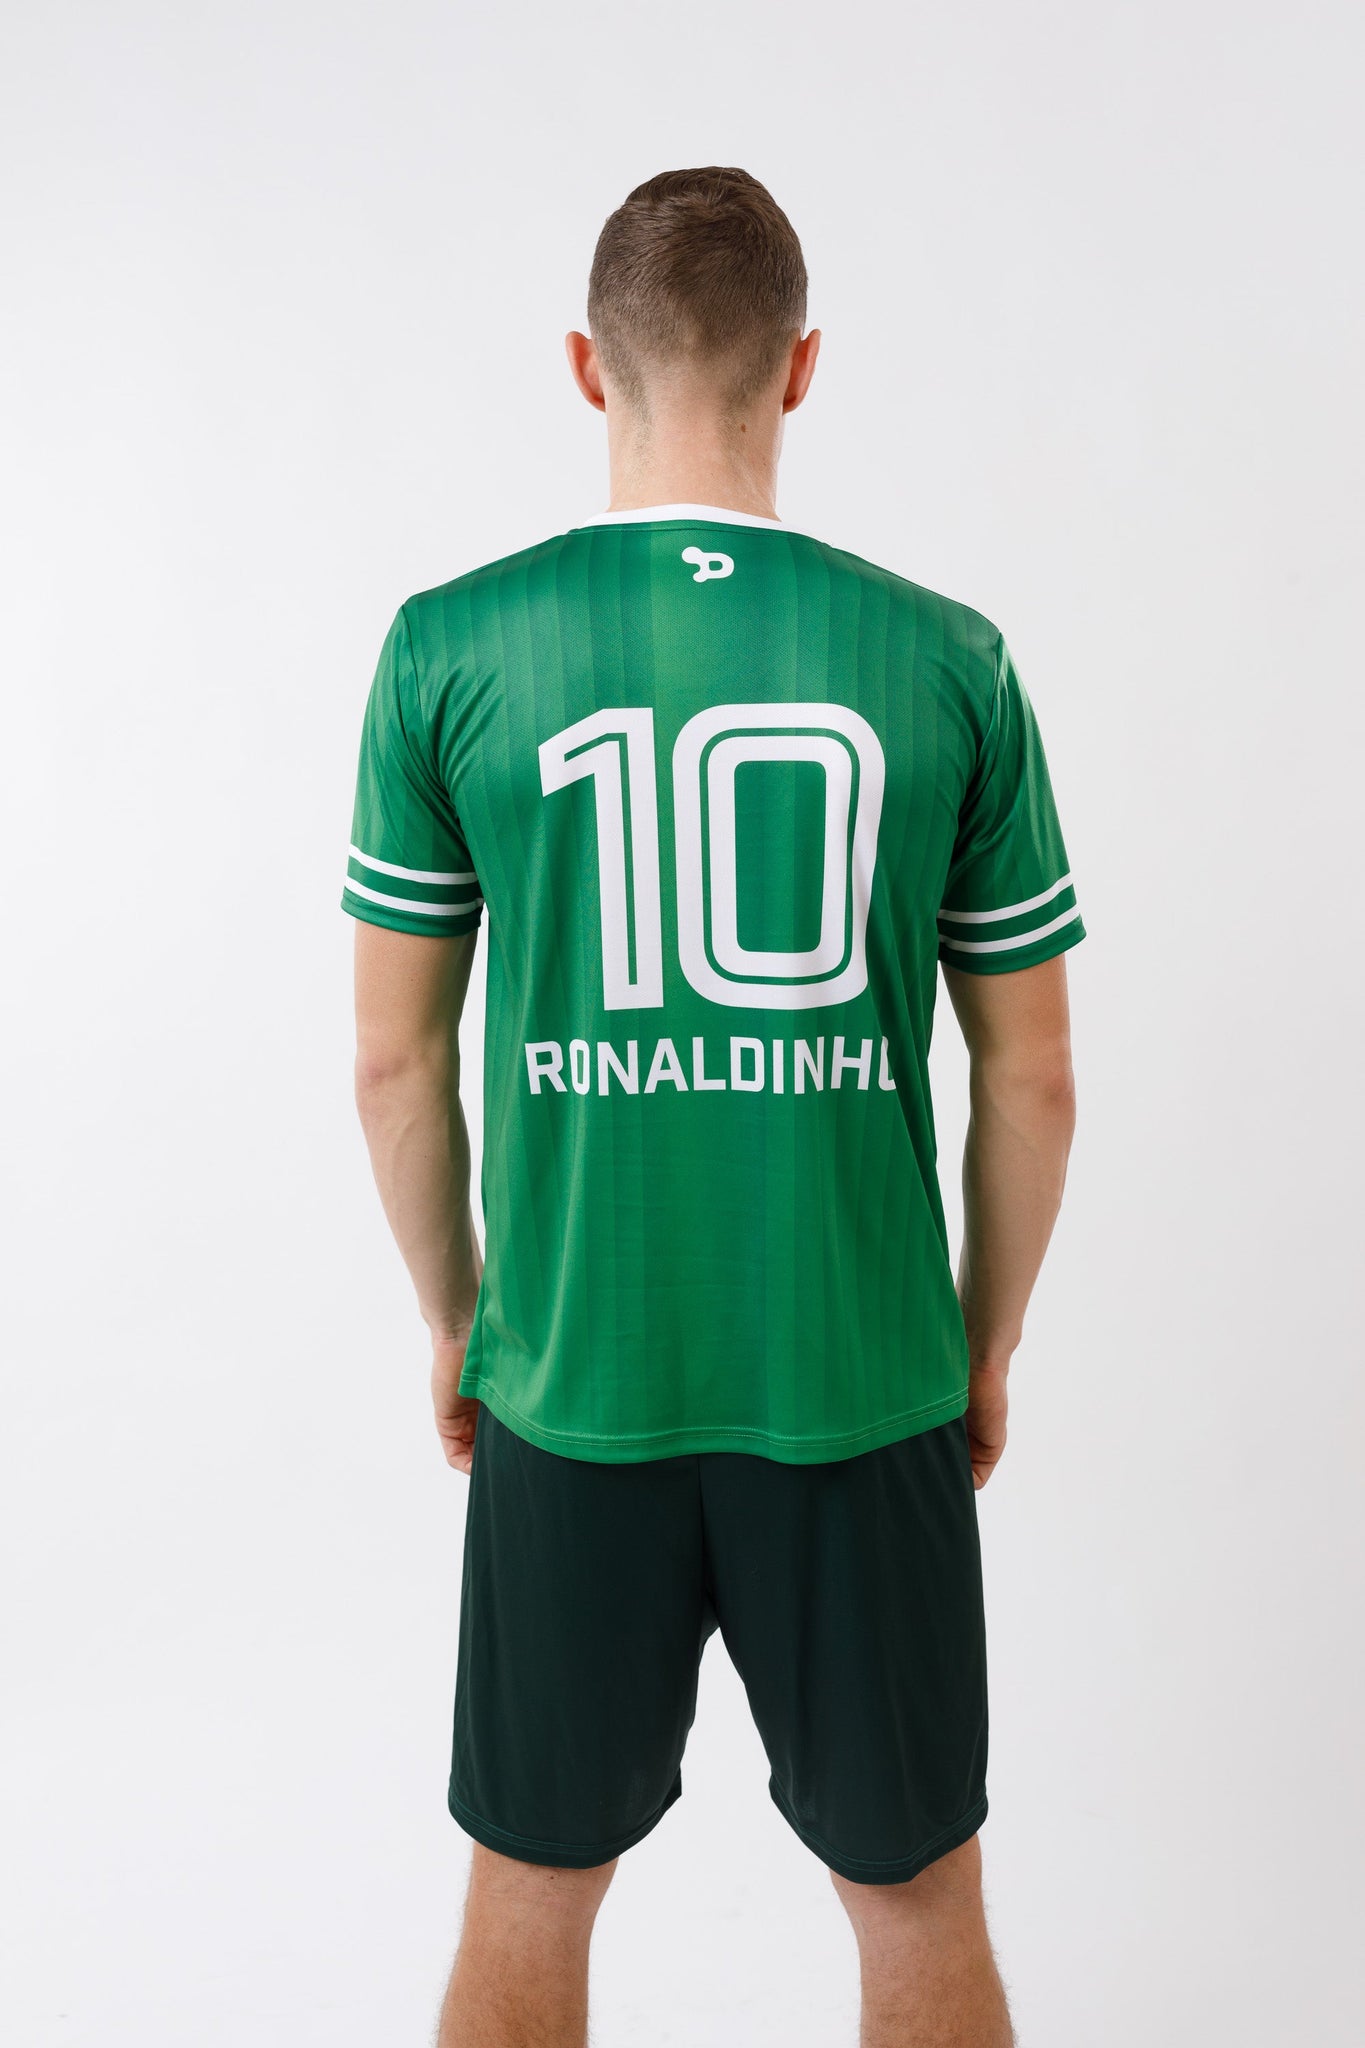 Ronaldinho Saudi Arabia Jersey/Camisa Replica Wholesale